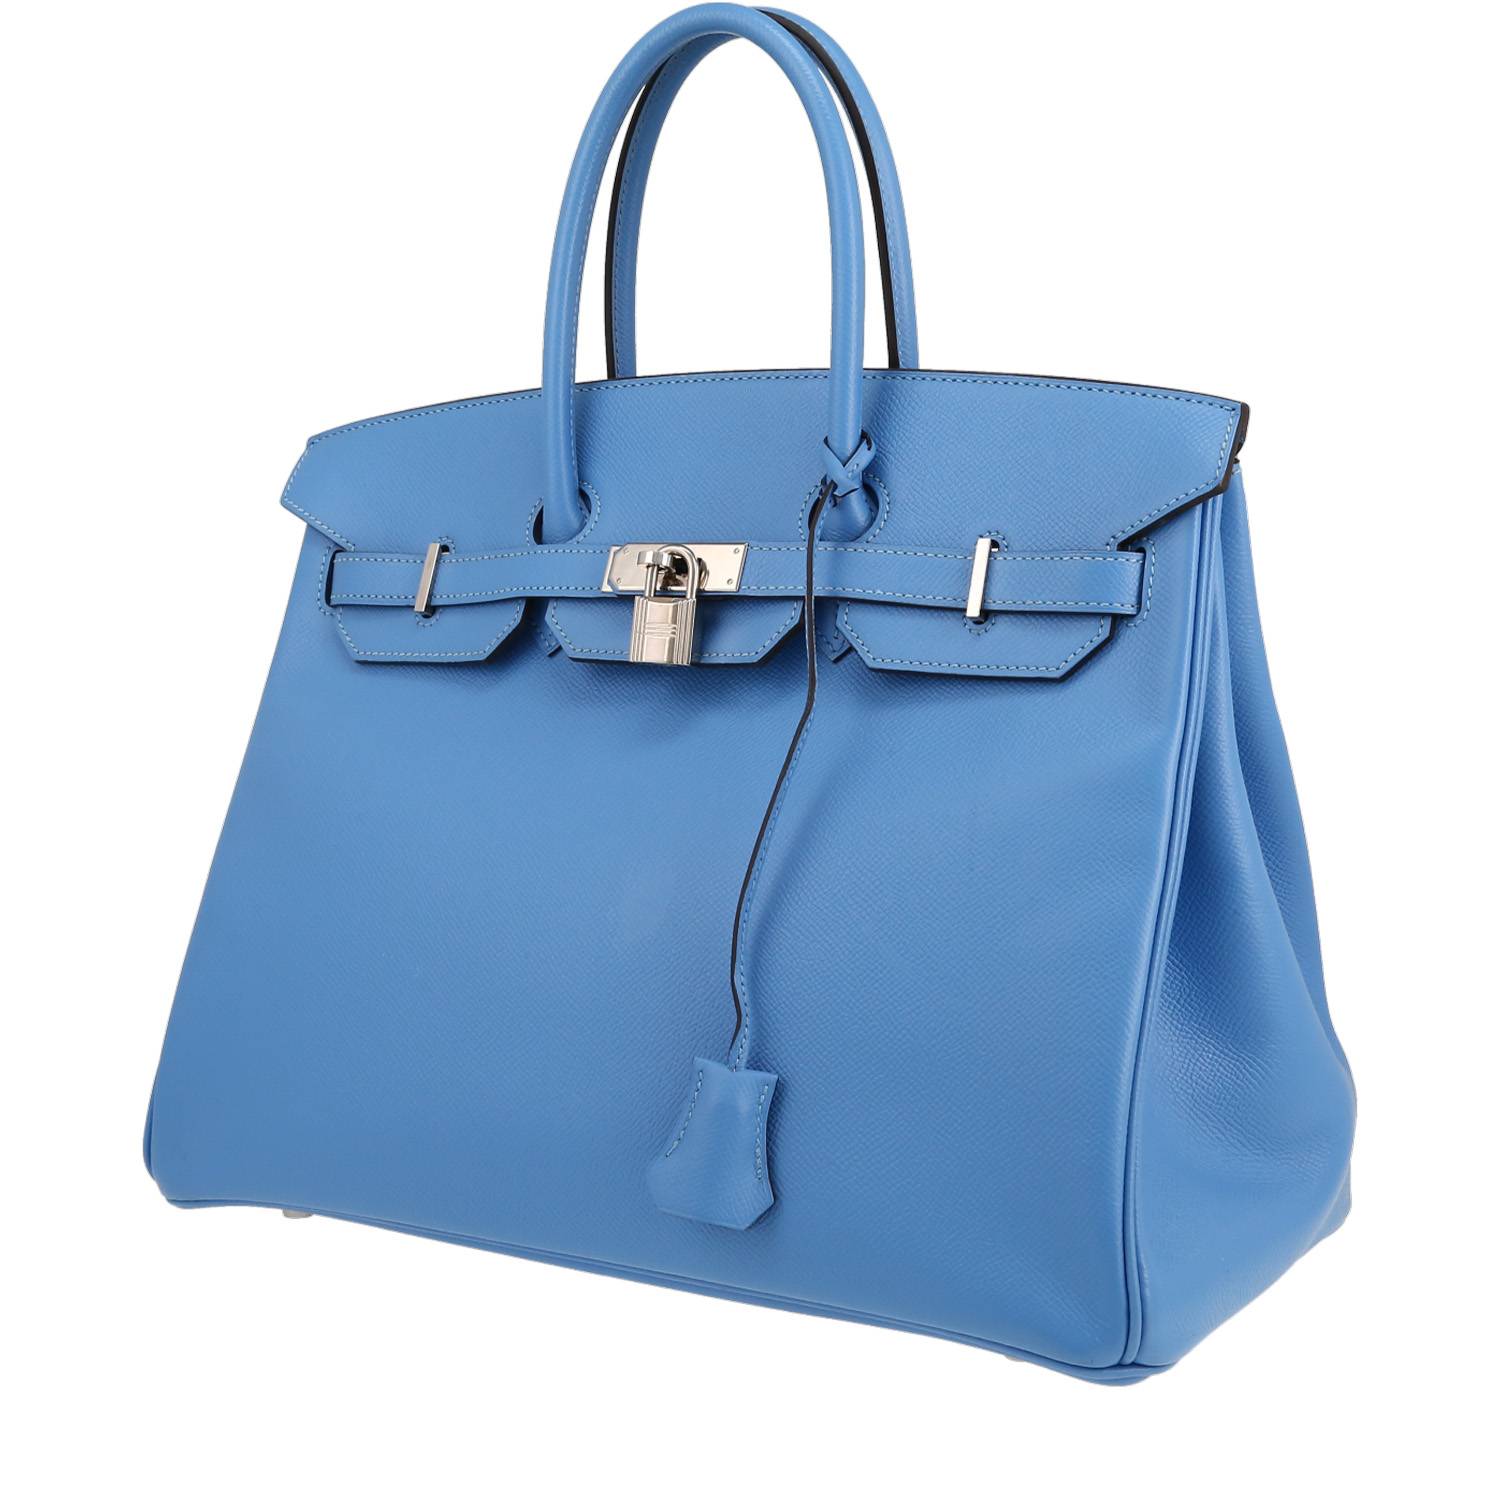 Birkin 35 cm Handbag In Bleu Paradis Epsom Leather